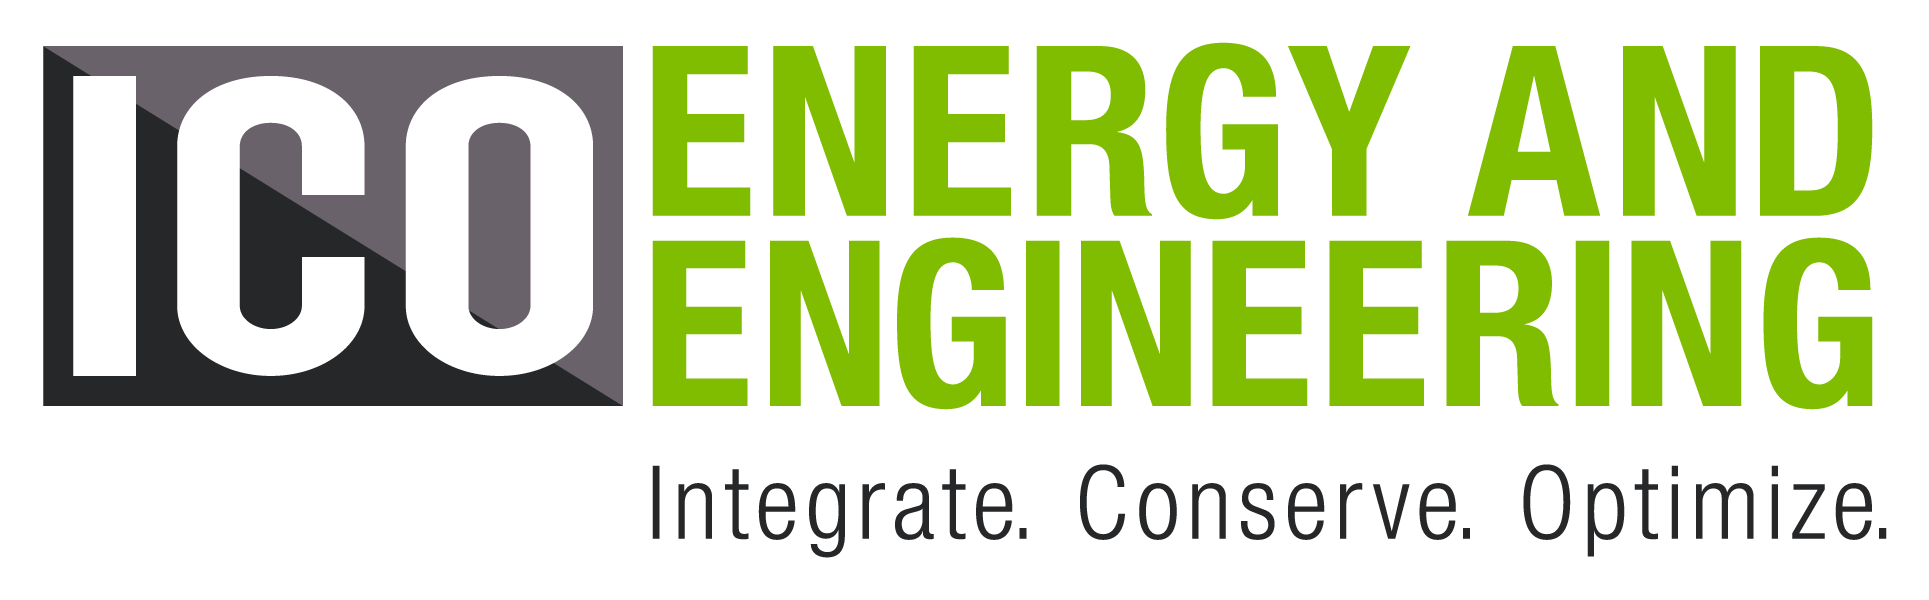 ICO Energy and Engineering